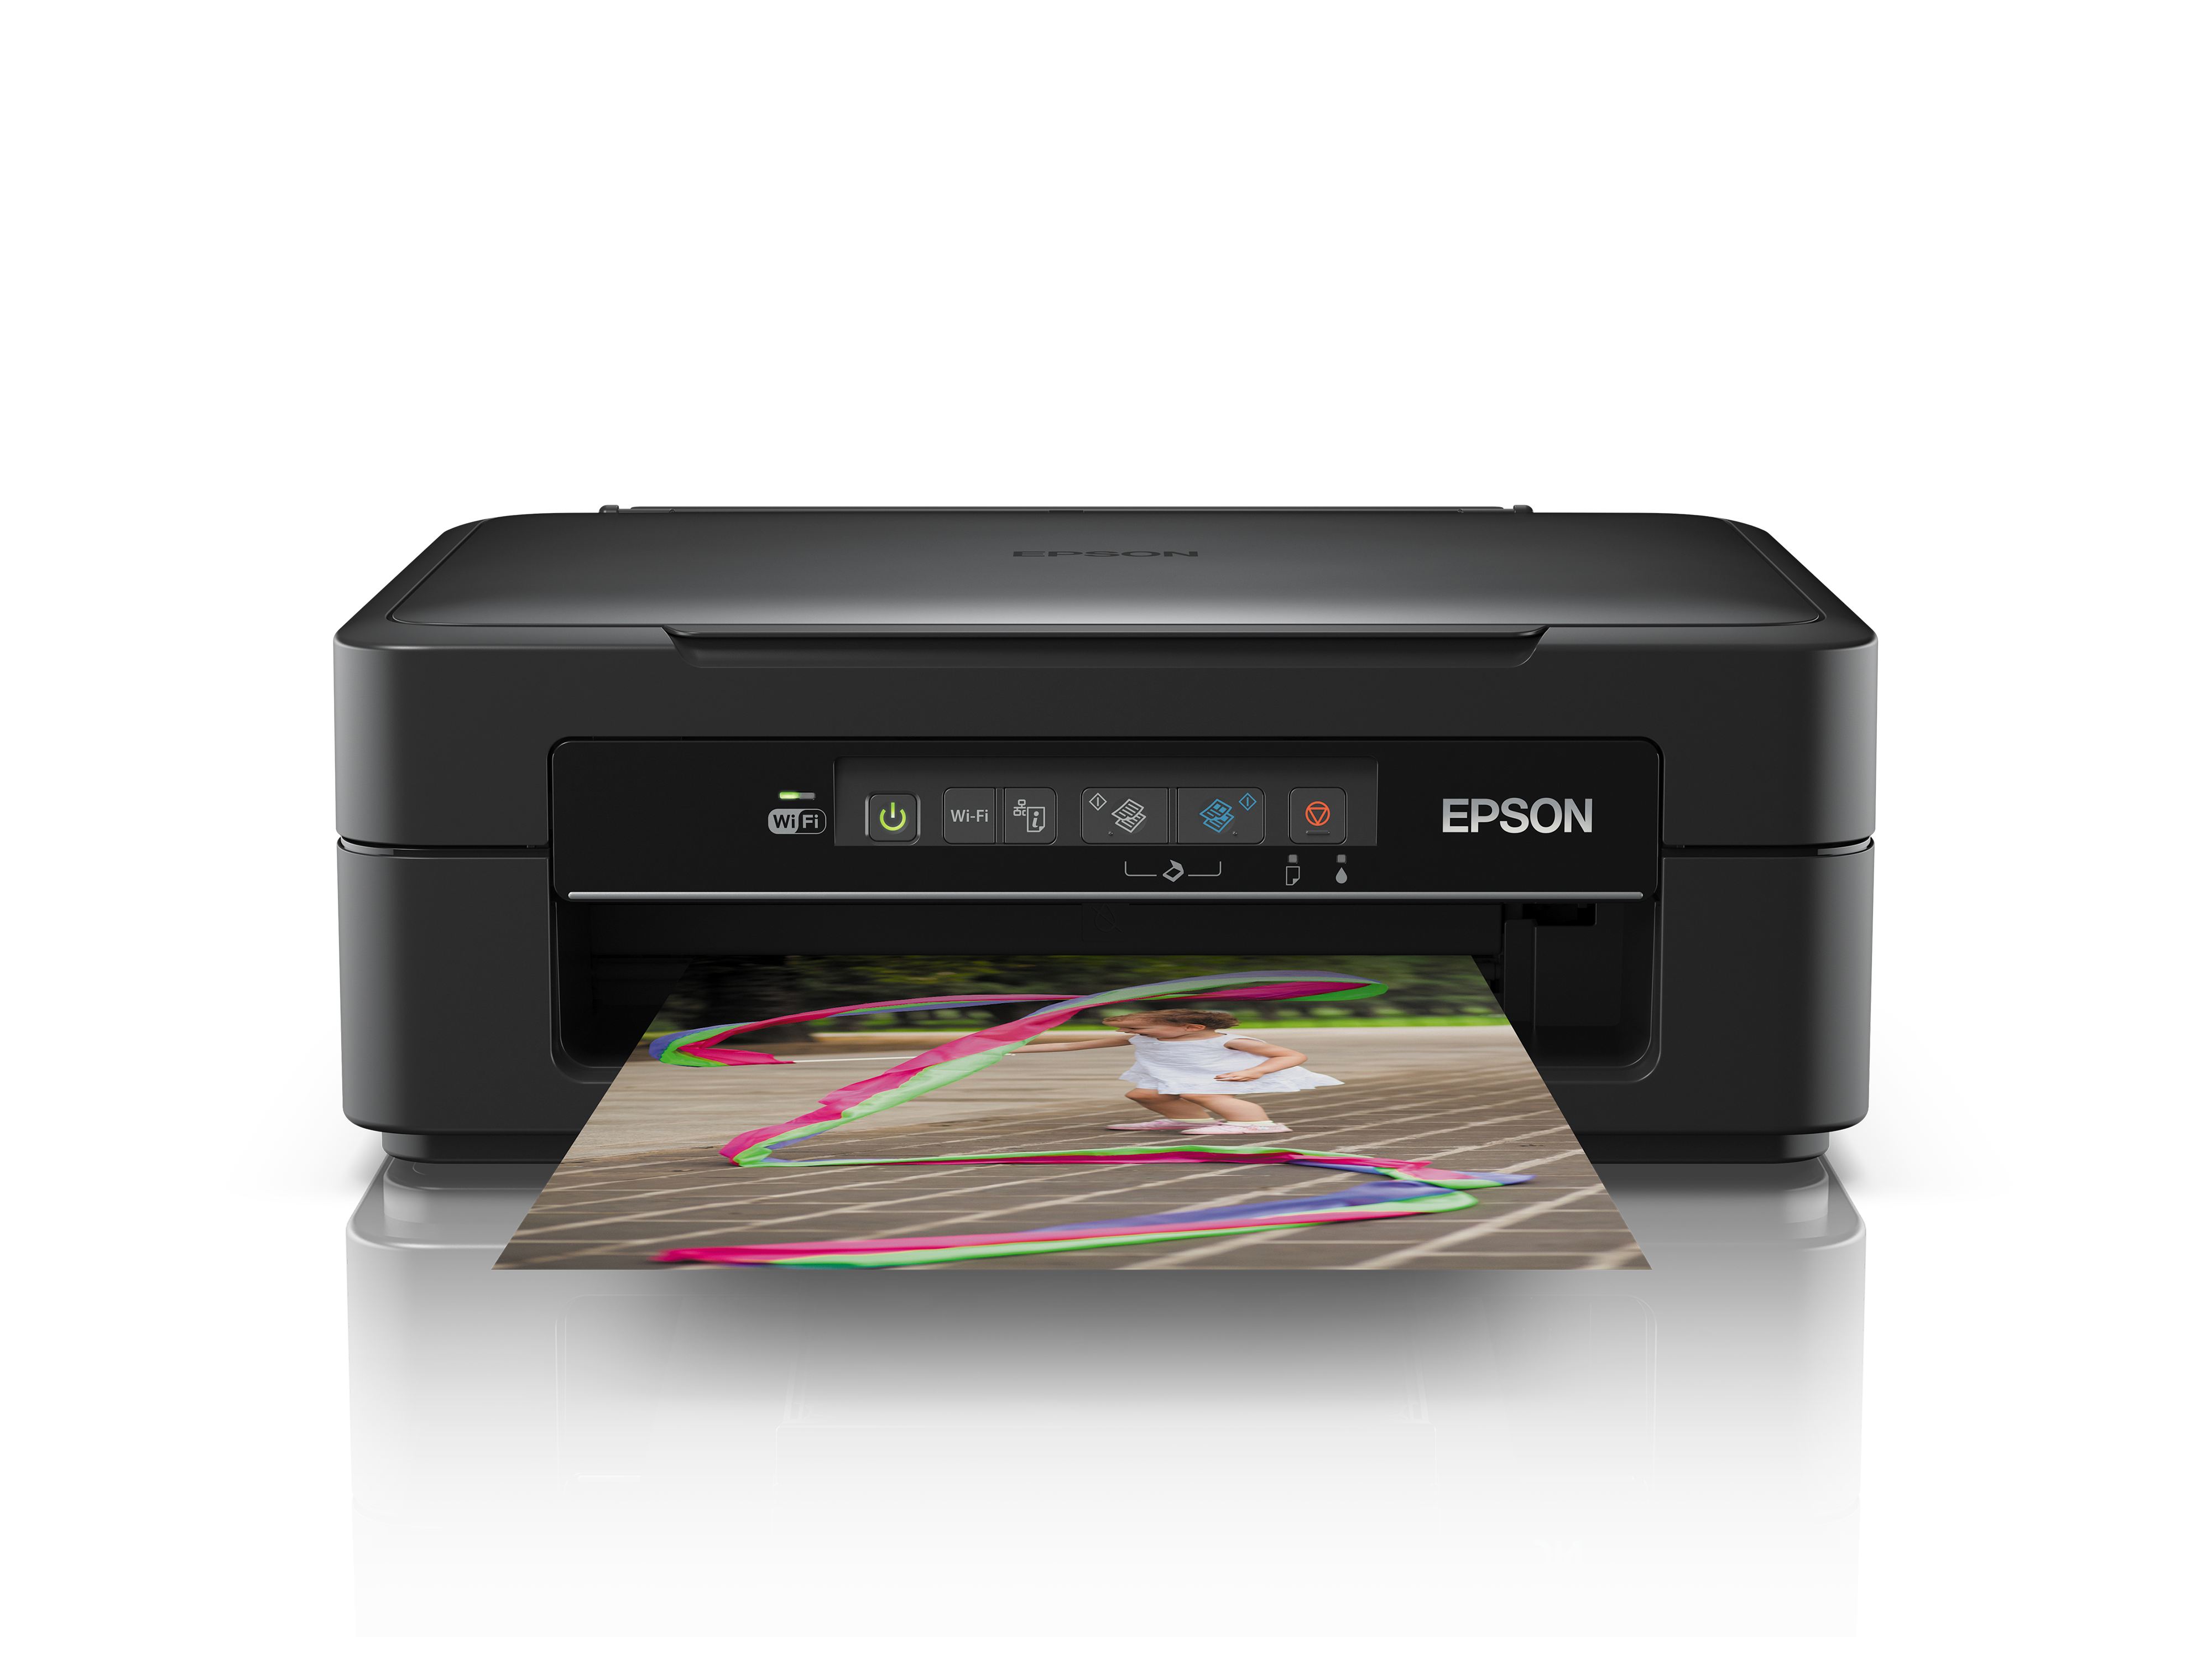 Home | Consumer | Inkjet Printers | Printers | Products Epson Republic of Ireland